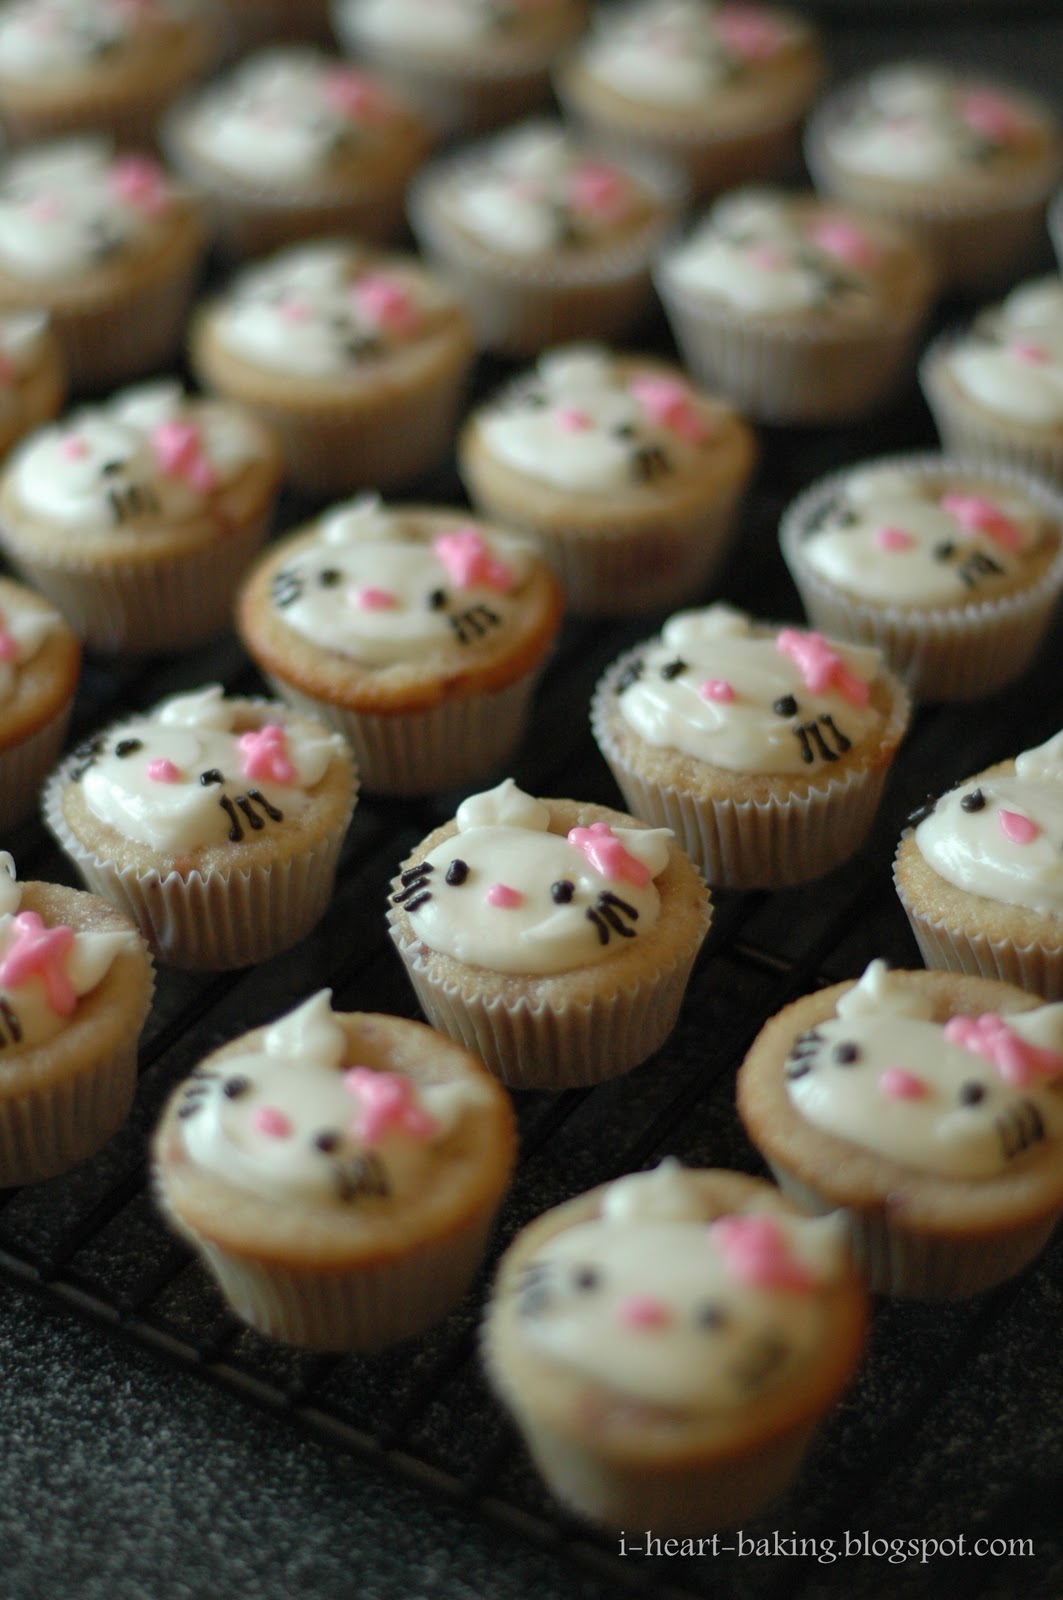 Making Mini Cupcakes